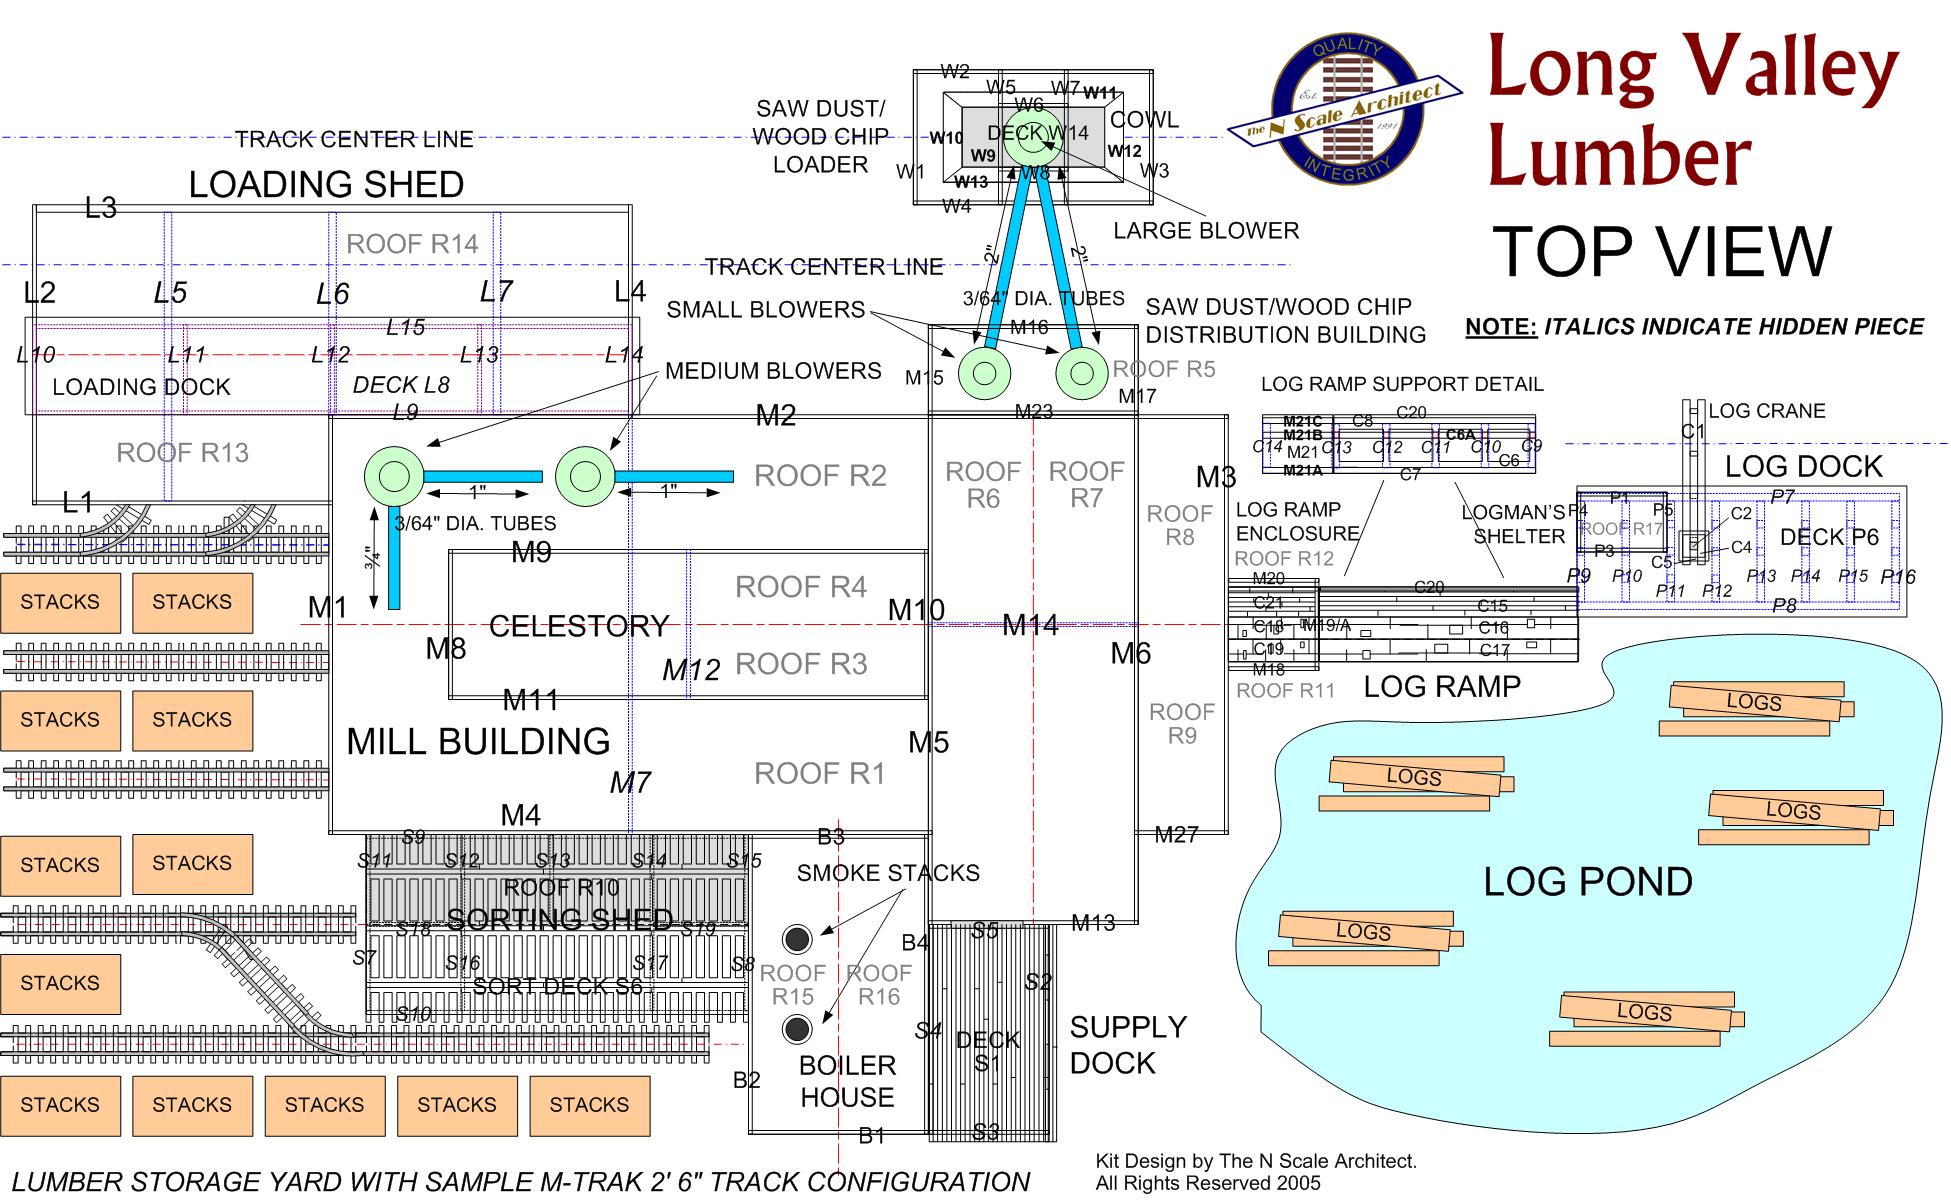 Long Valley Lumber - Z Floor Plan View